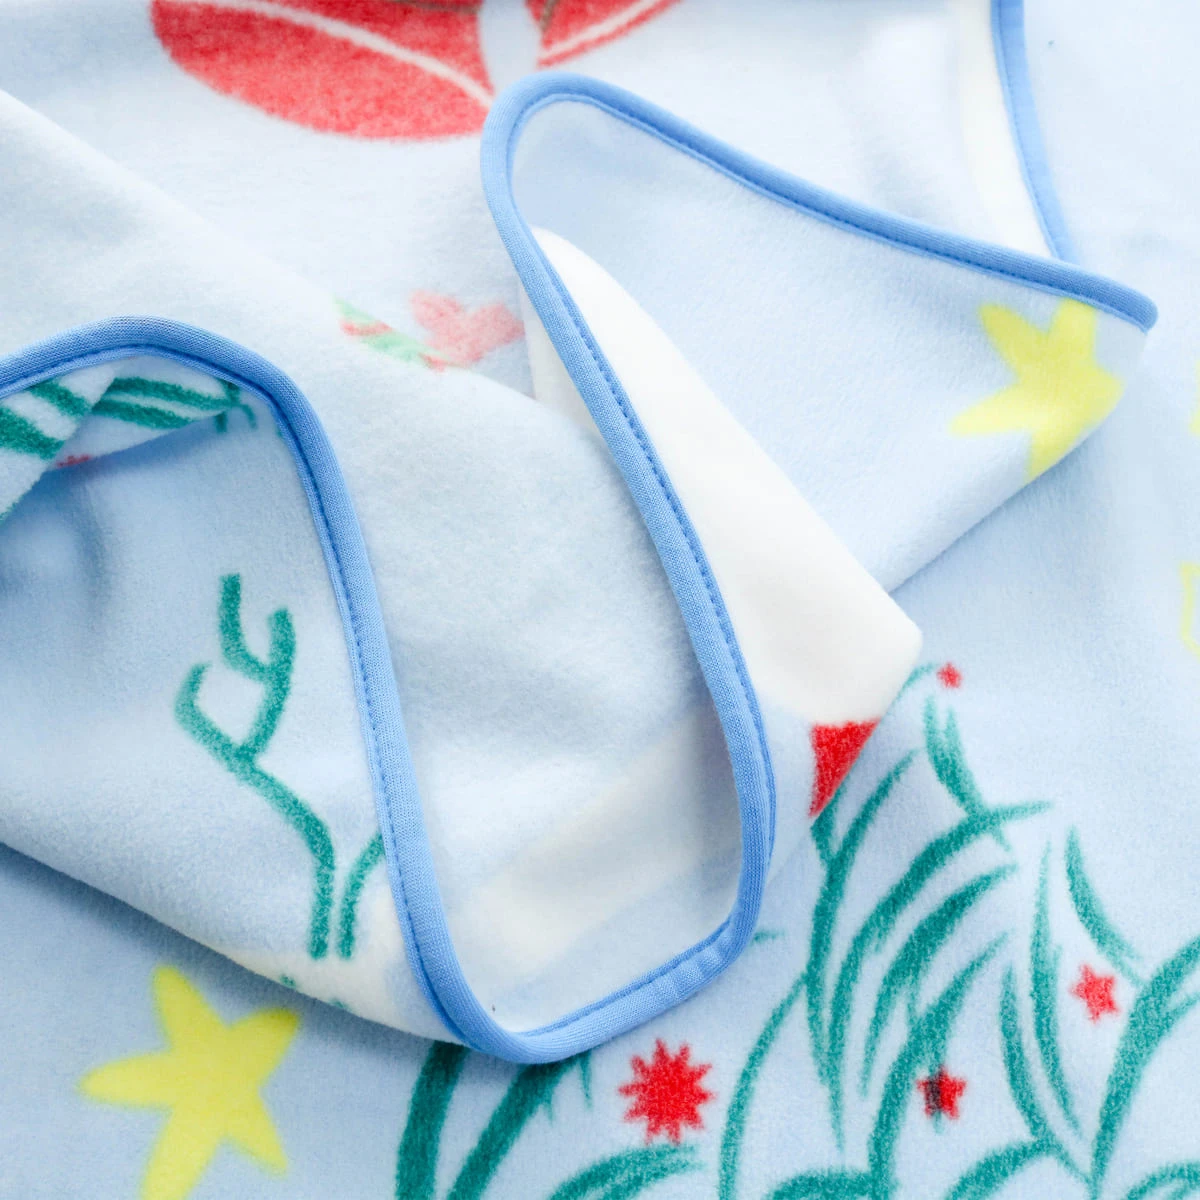 Angel Snow Printed Fleece Baby Blanket with Binding Edging (Blue)